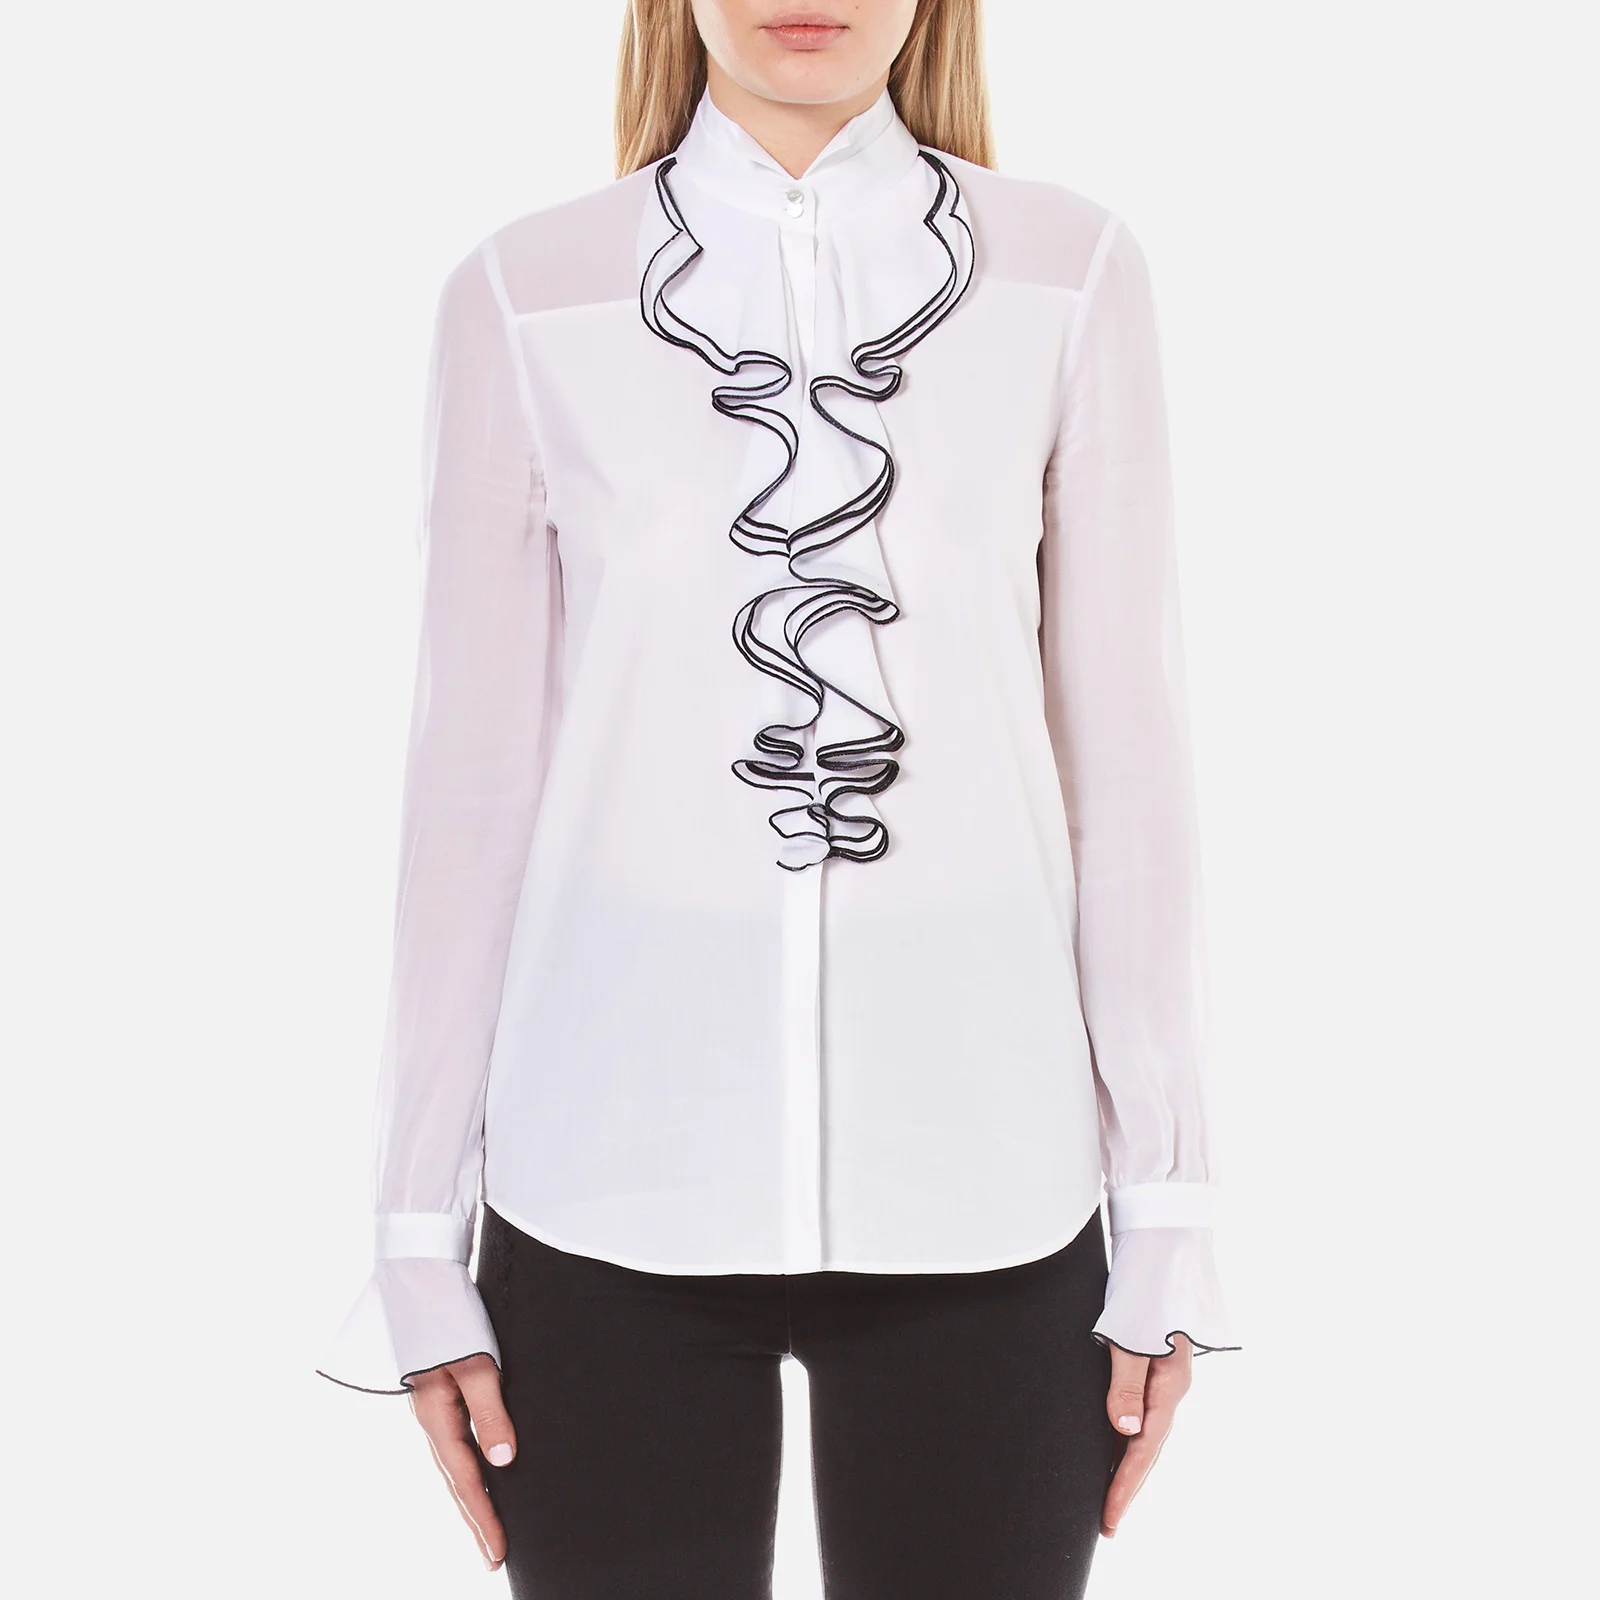 Karl Lagerfeld Women's Sheer/Solid Ruffle Blouse - White Image 1